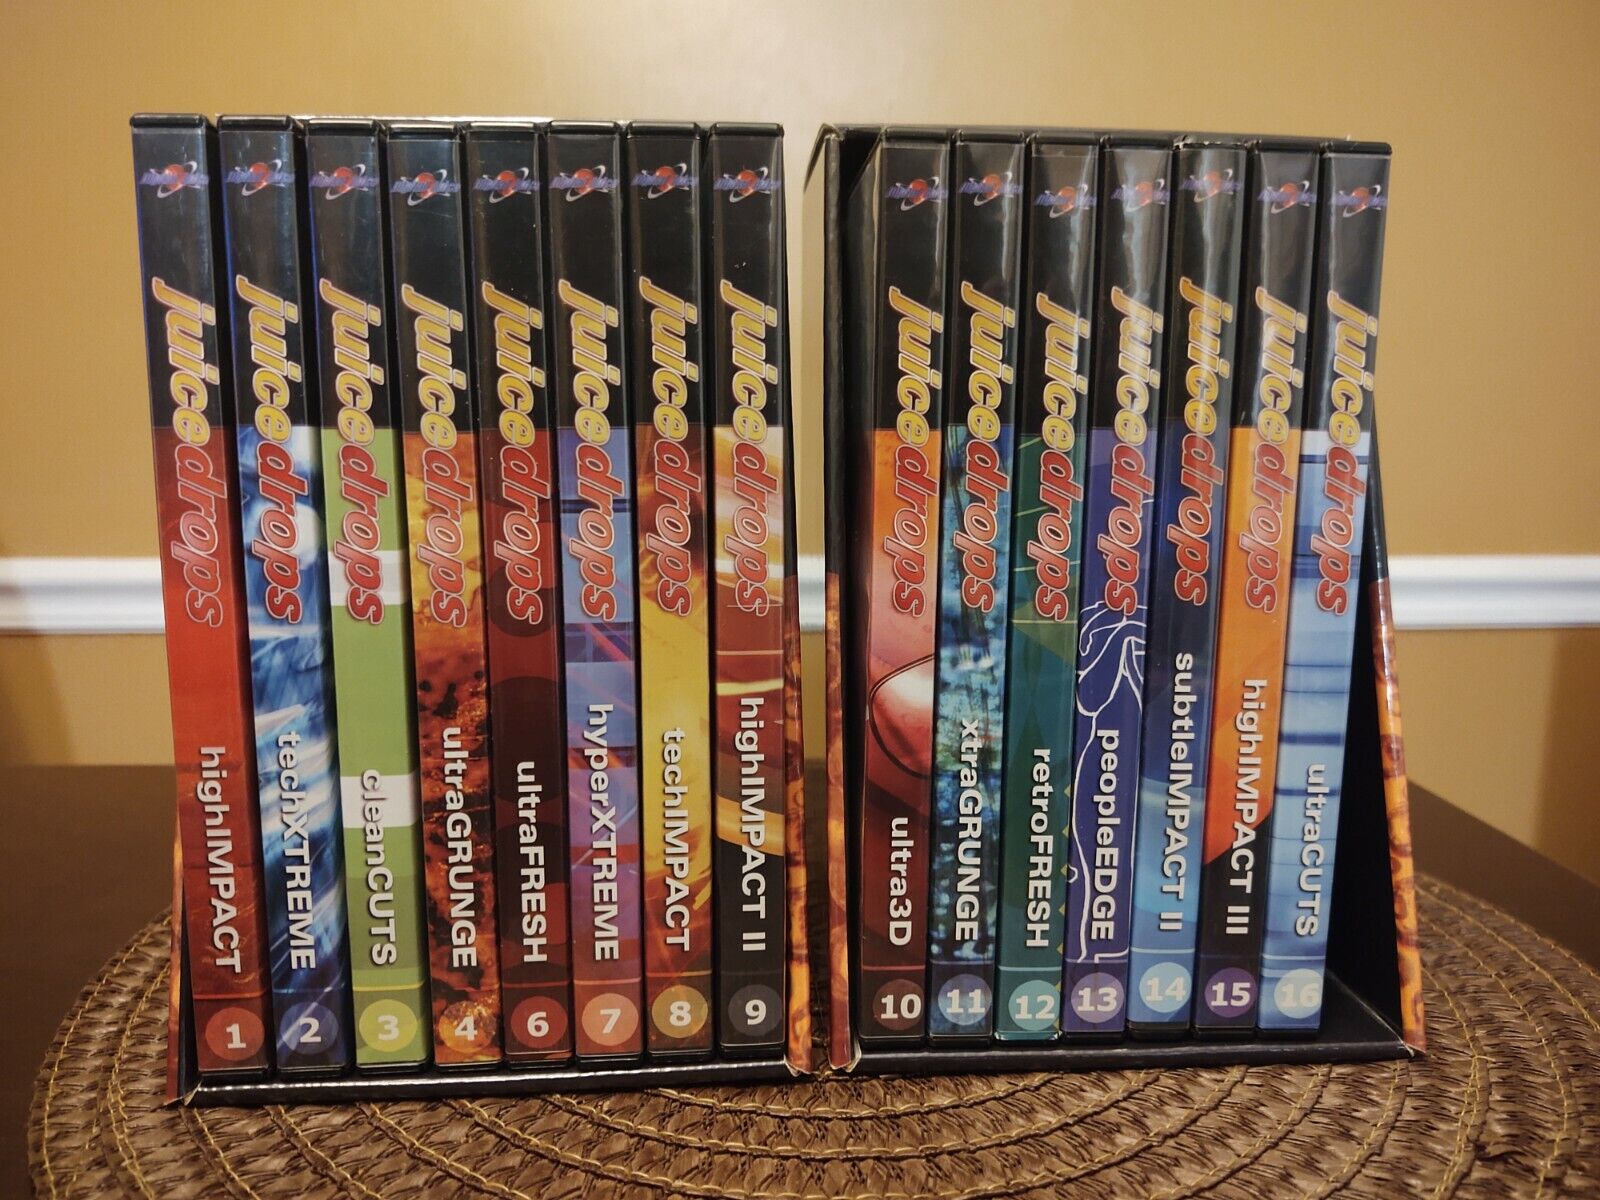 Lot of 16 Digital Juice - Juice Drops DVDs. (Volumes 1 - 16) 